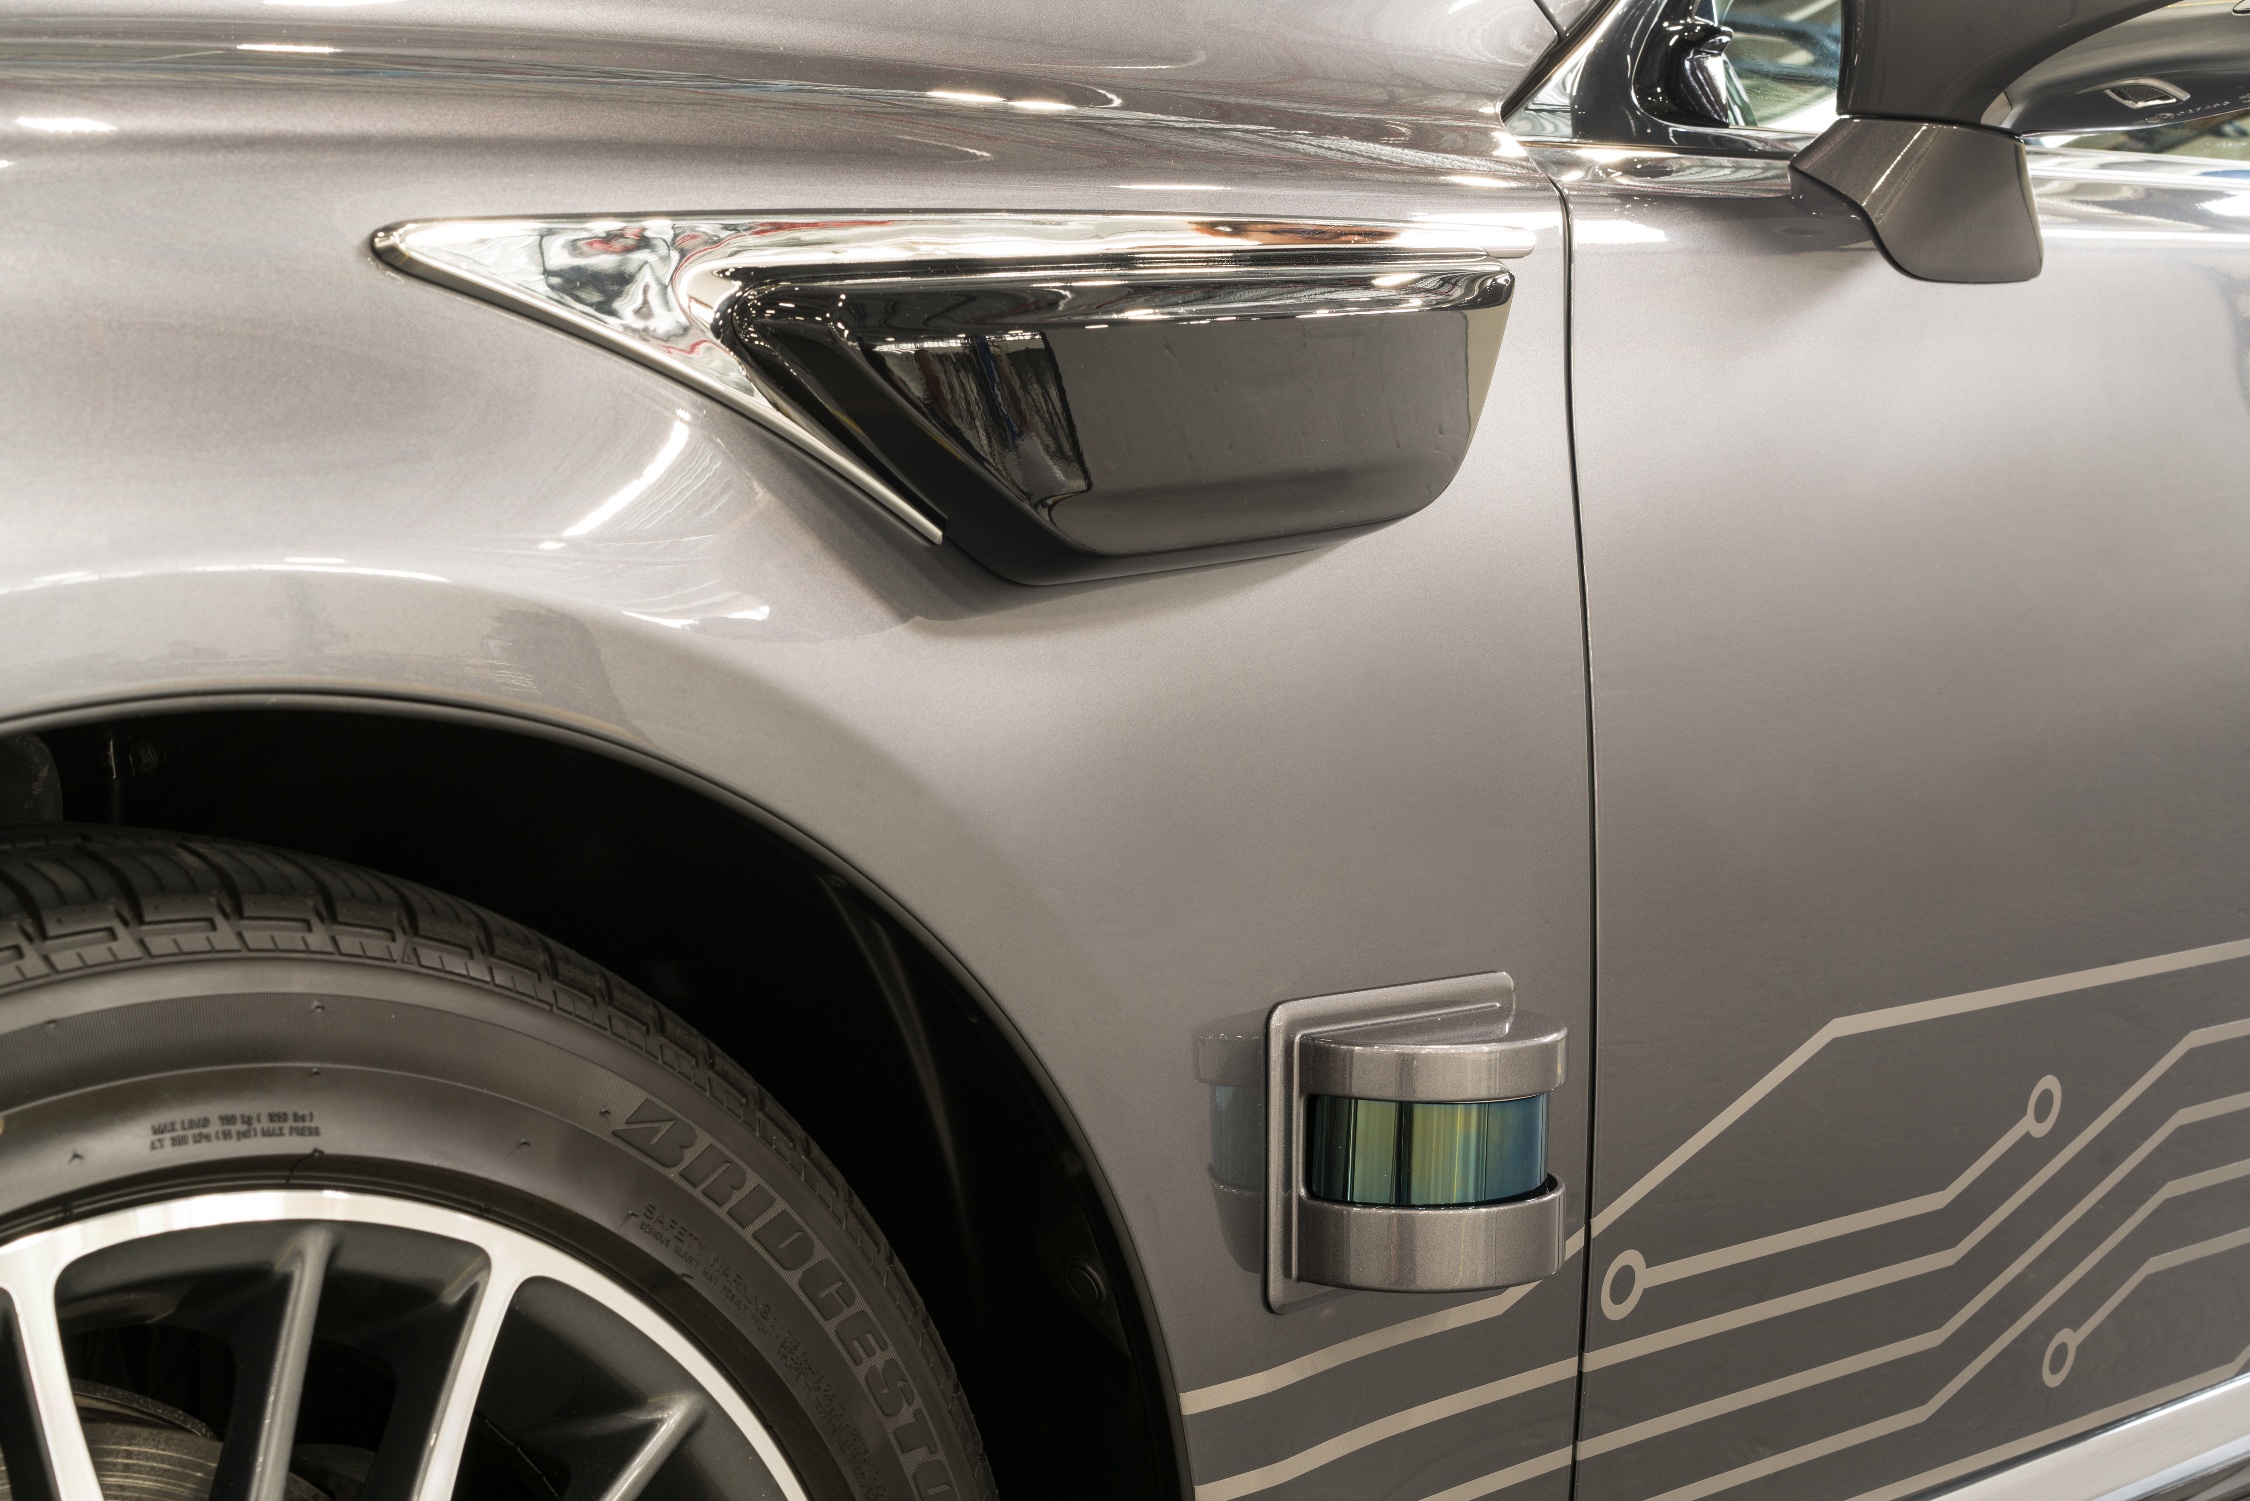 The Lexus Platform 3.0 incorporates blended sensors into its coachwork design